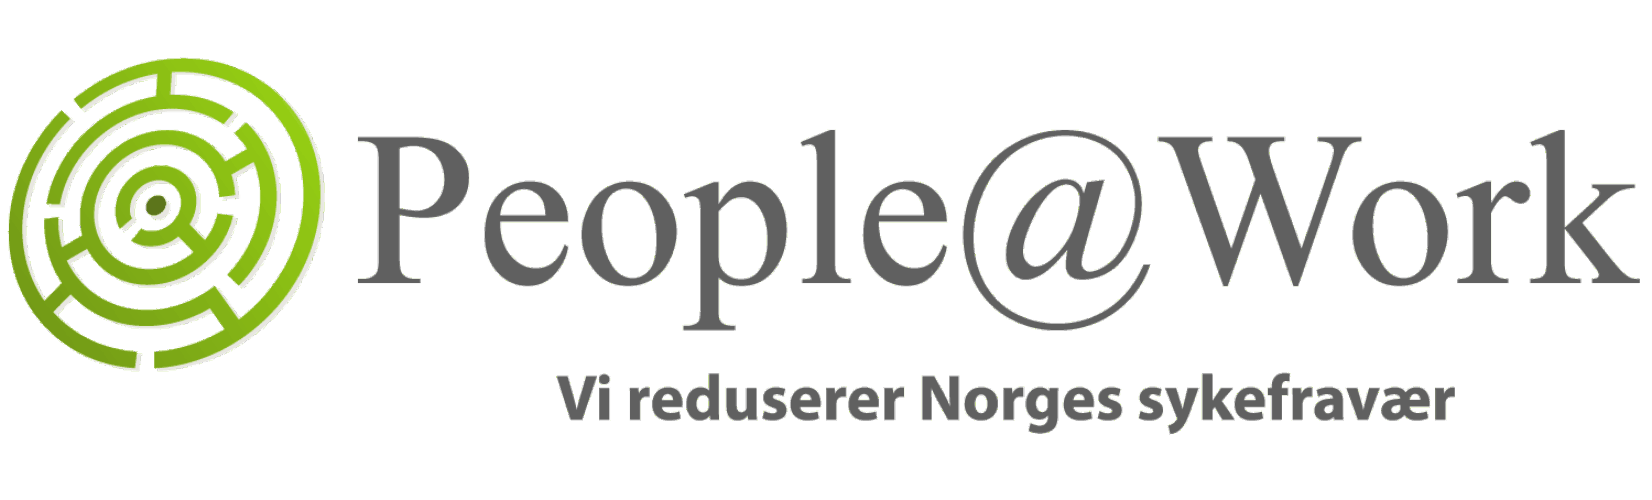 Borregaard HR Norge Kompetansepris 2017 05 11 09 22 56